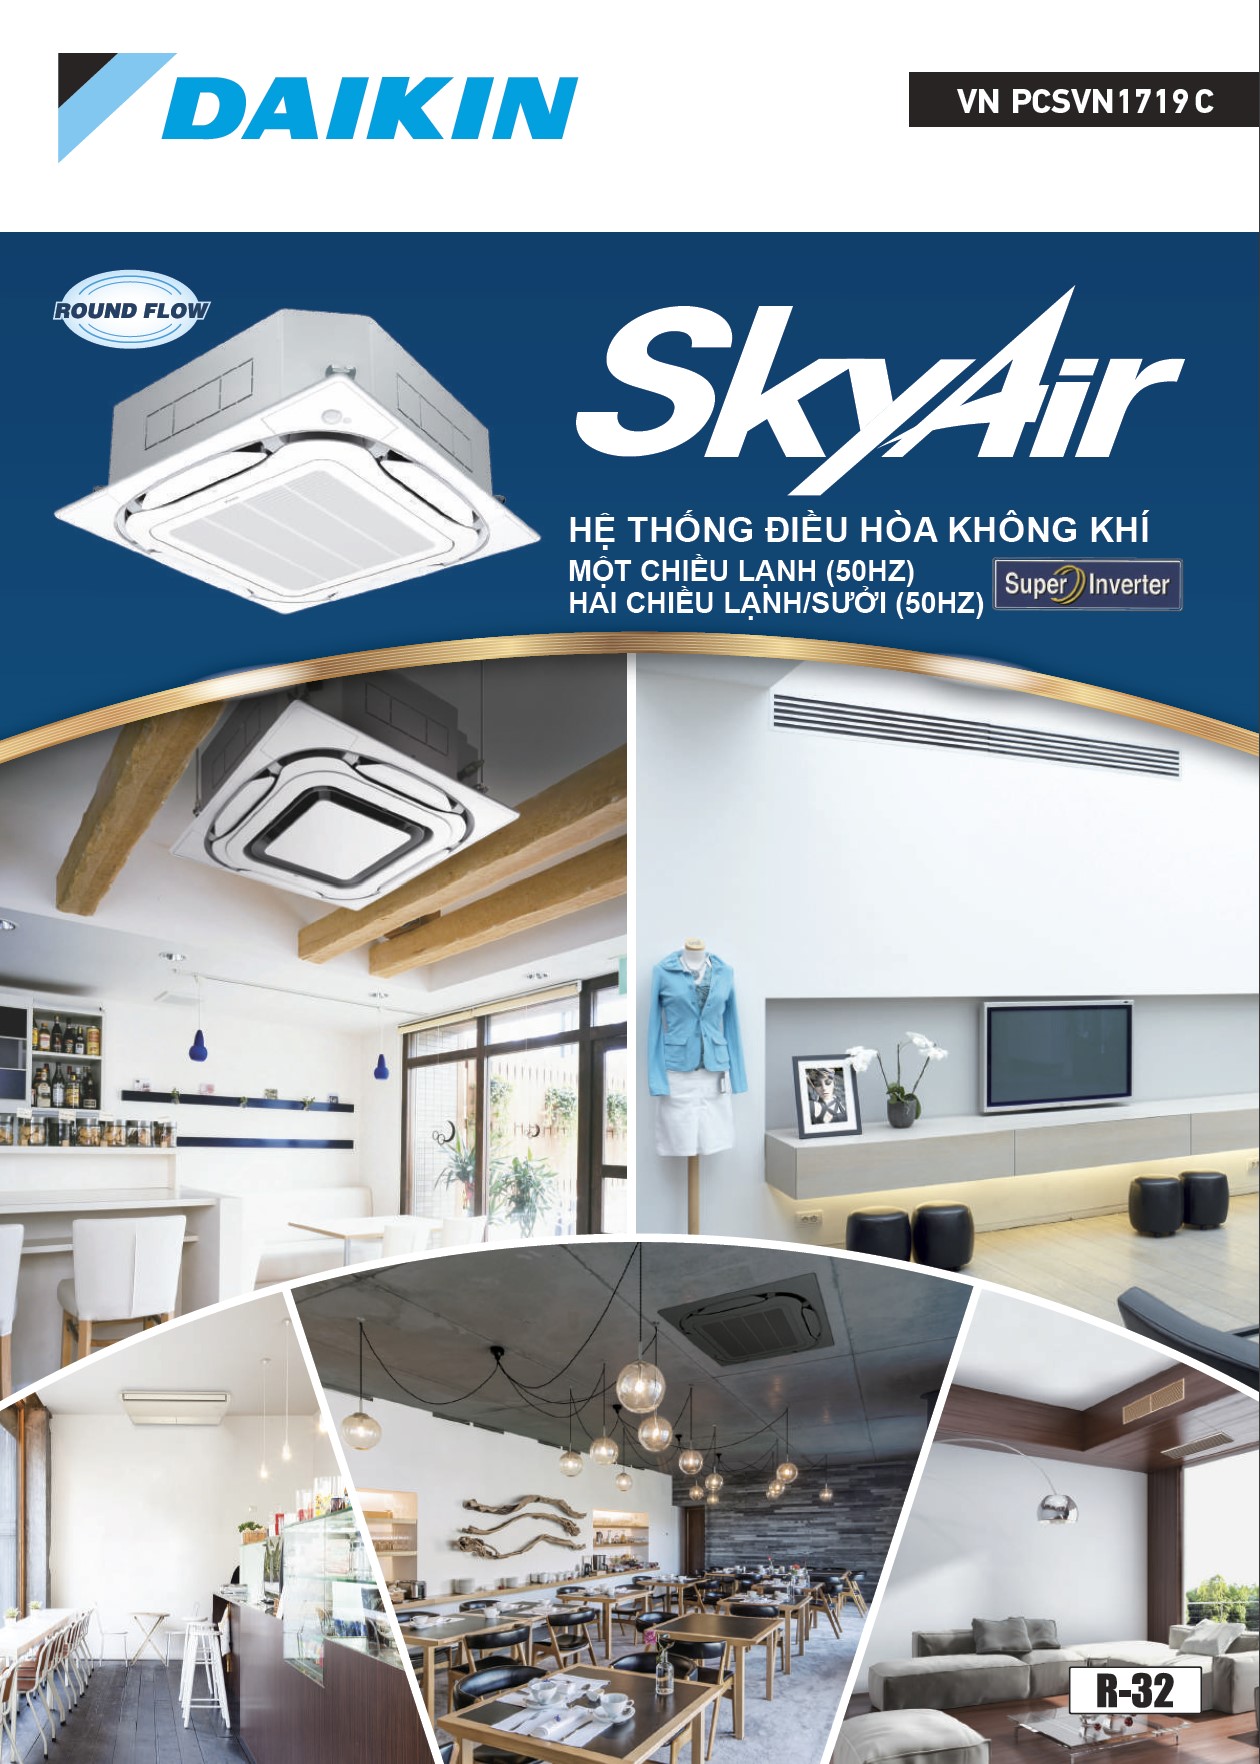 Skyair / Inverter / CO-HP (PCSVN1719C)